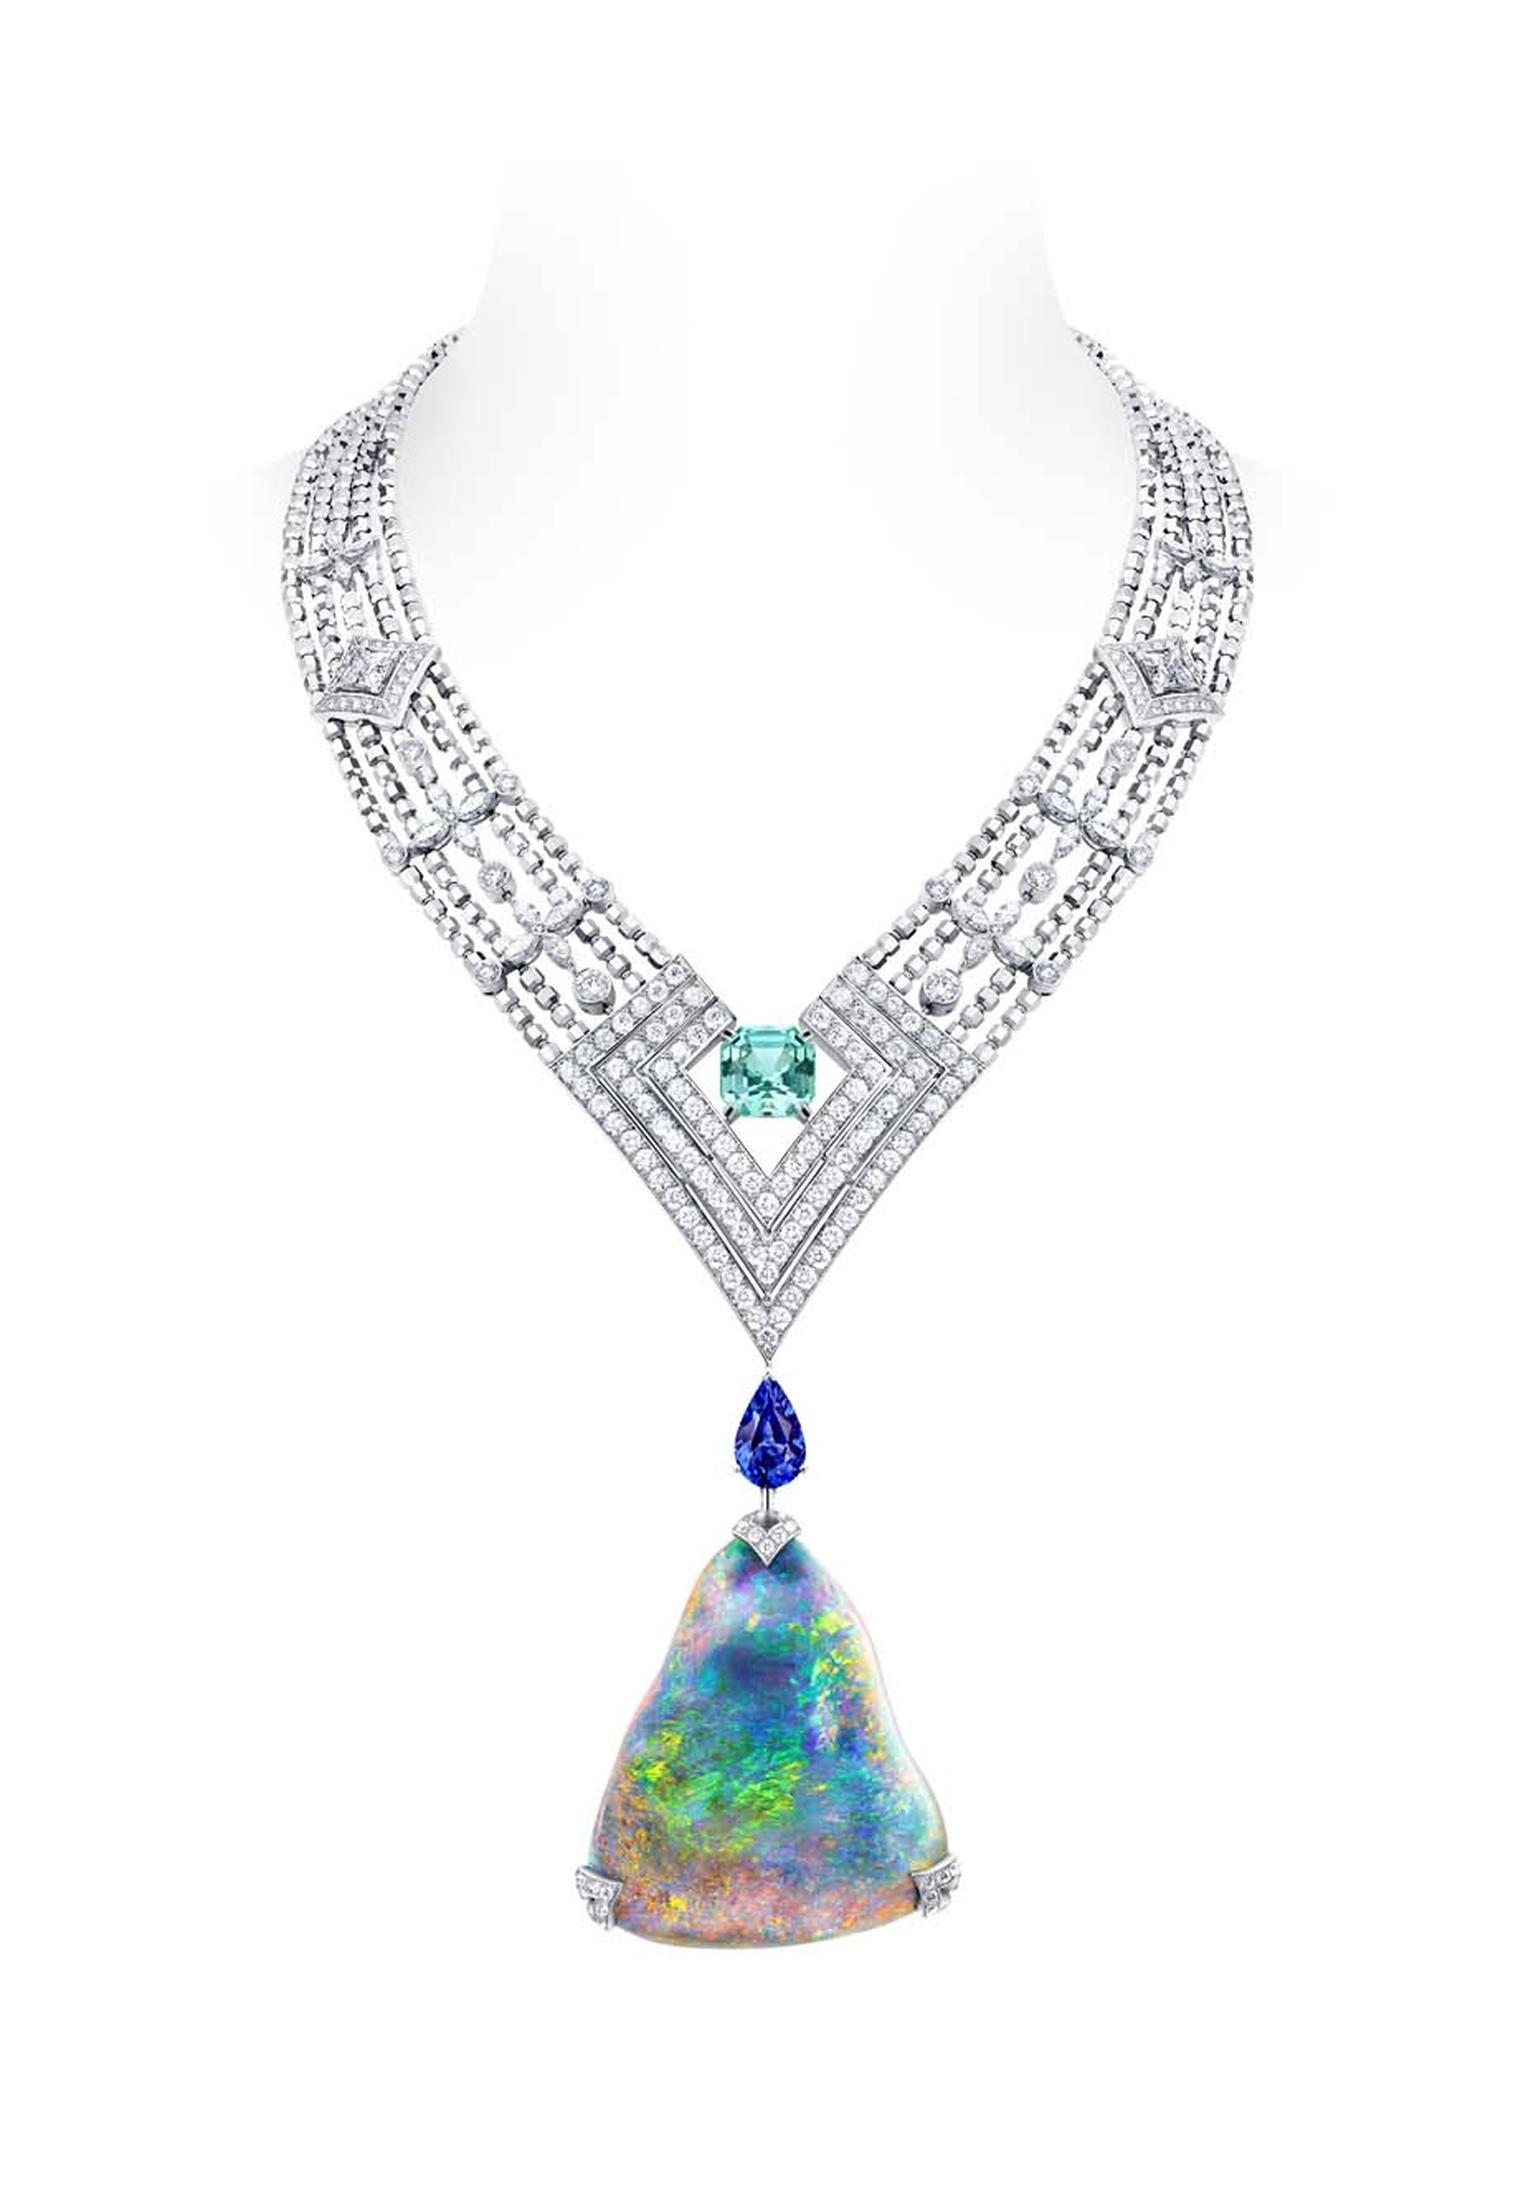 Luxury opal jewellery: new high jewellery for 2014 transforms